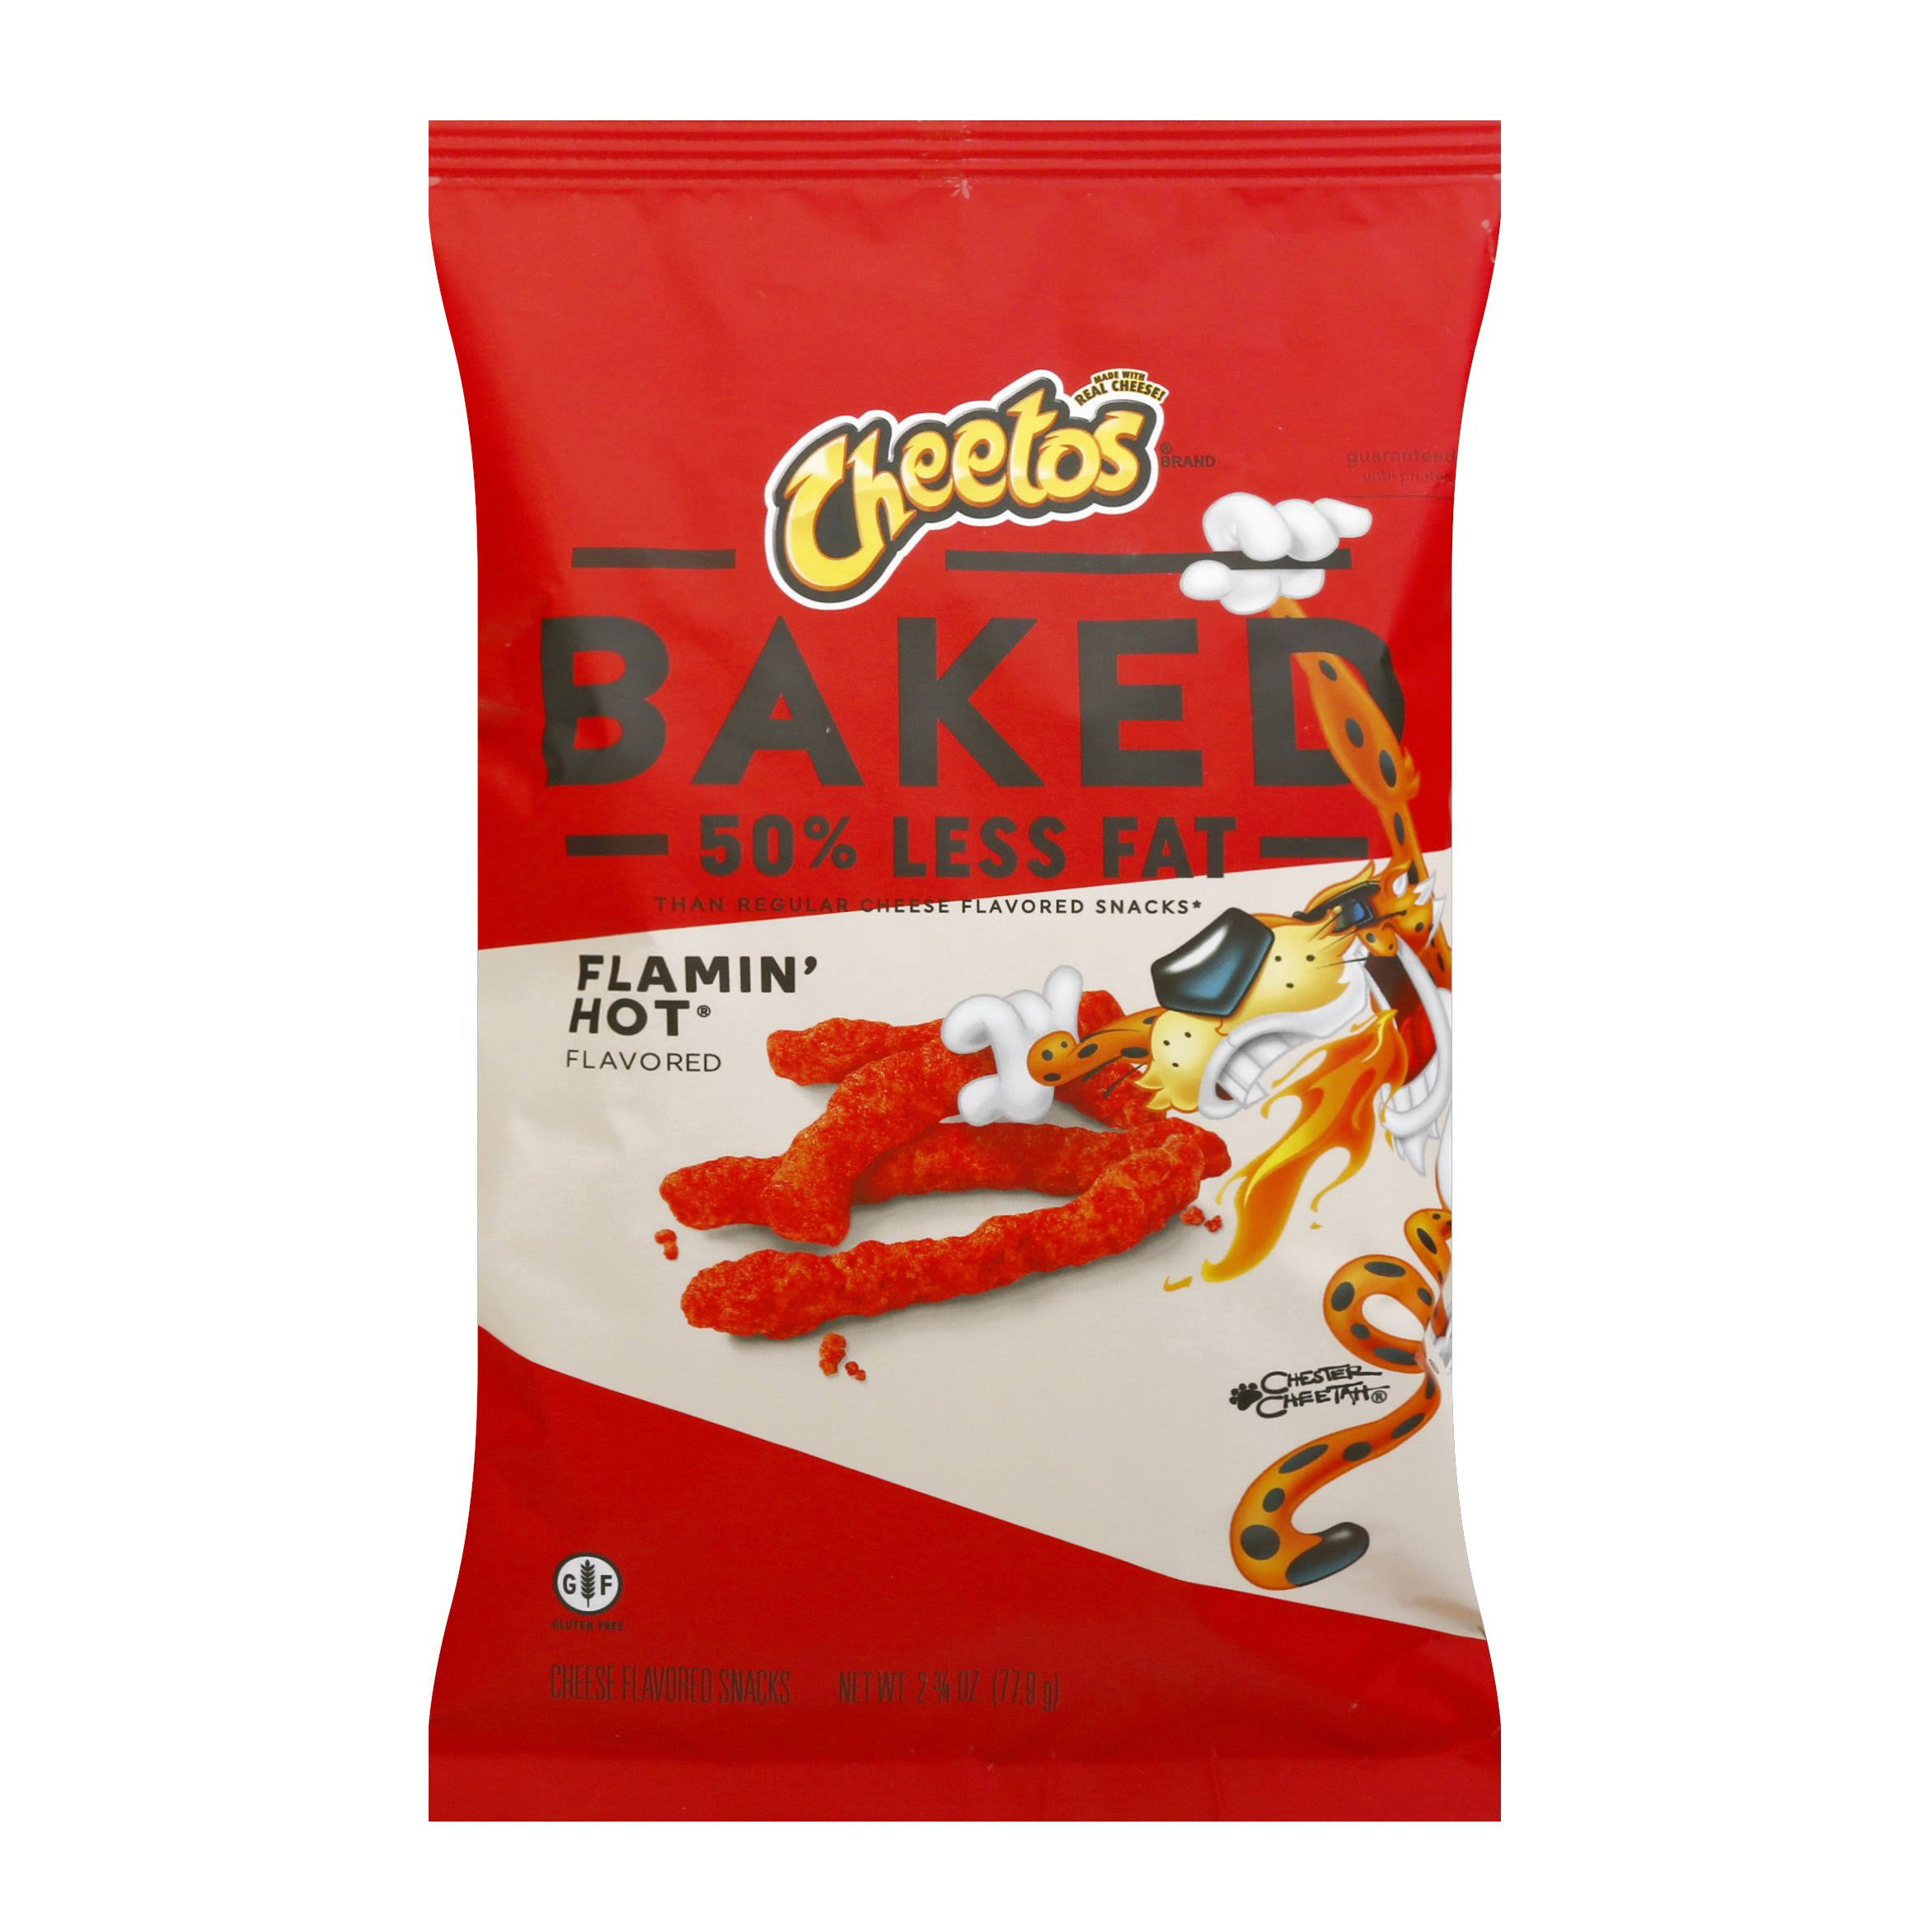 Cheetos Flamin' Hot Baked Cheese Flavored Snacks - 2.75 oz